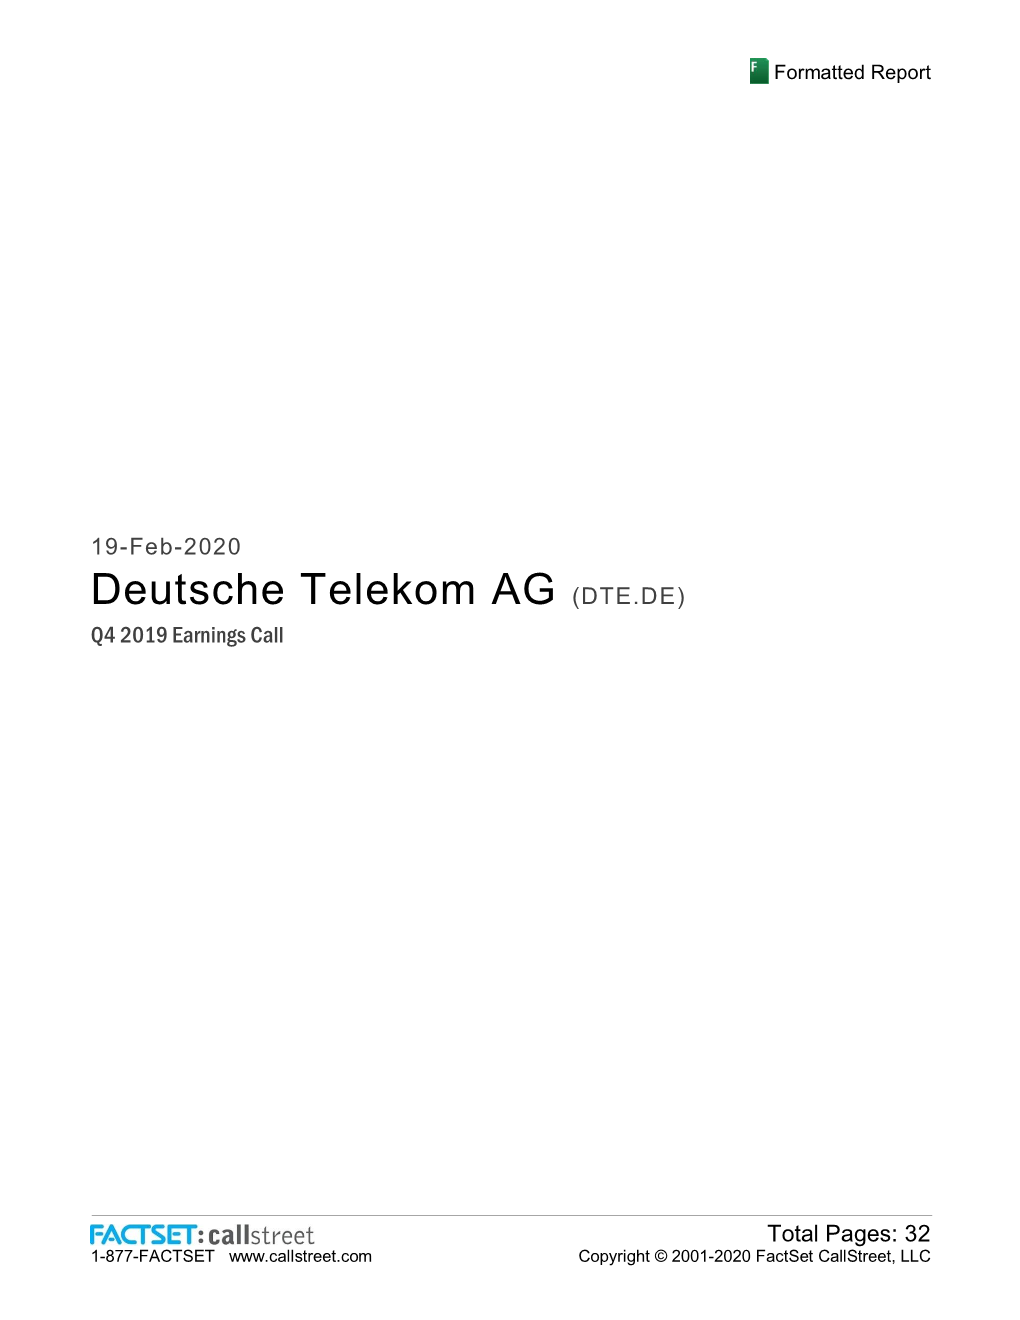 Deutsche Telekom AG (DTE.DE) Q4 2019 Earnings Call